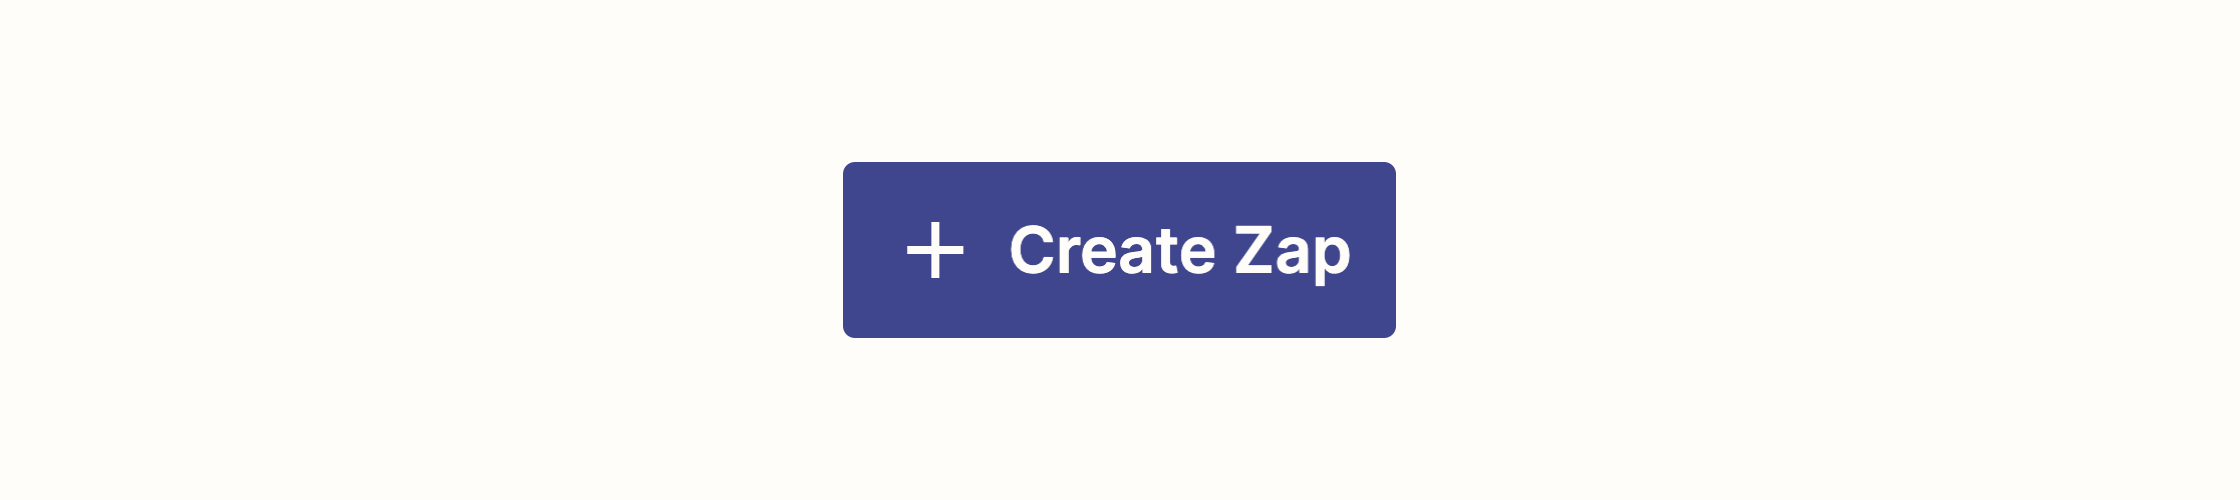 Create zap